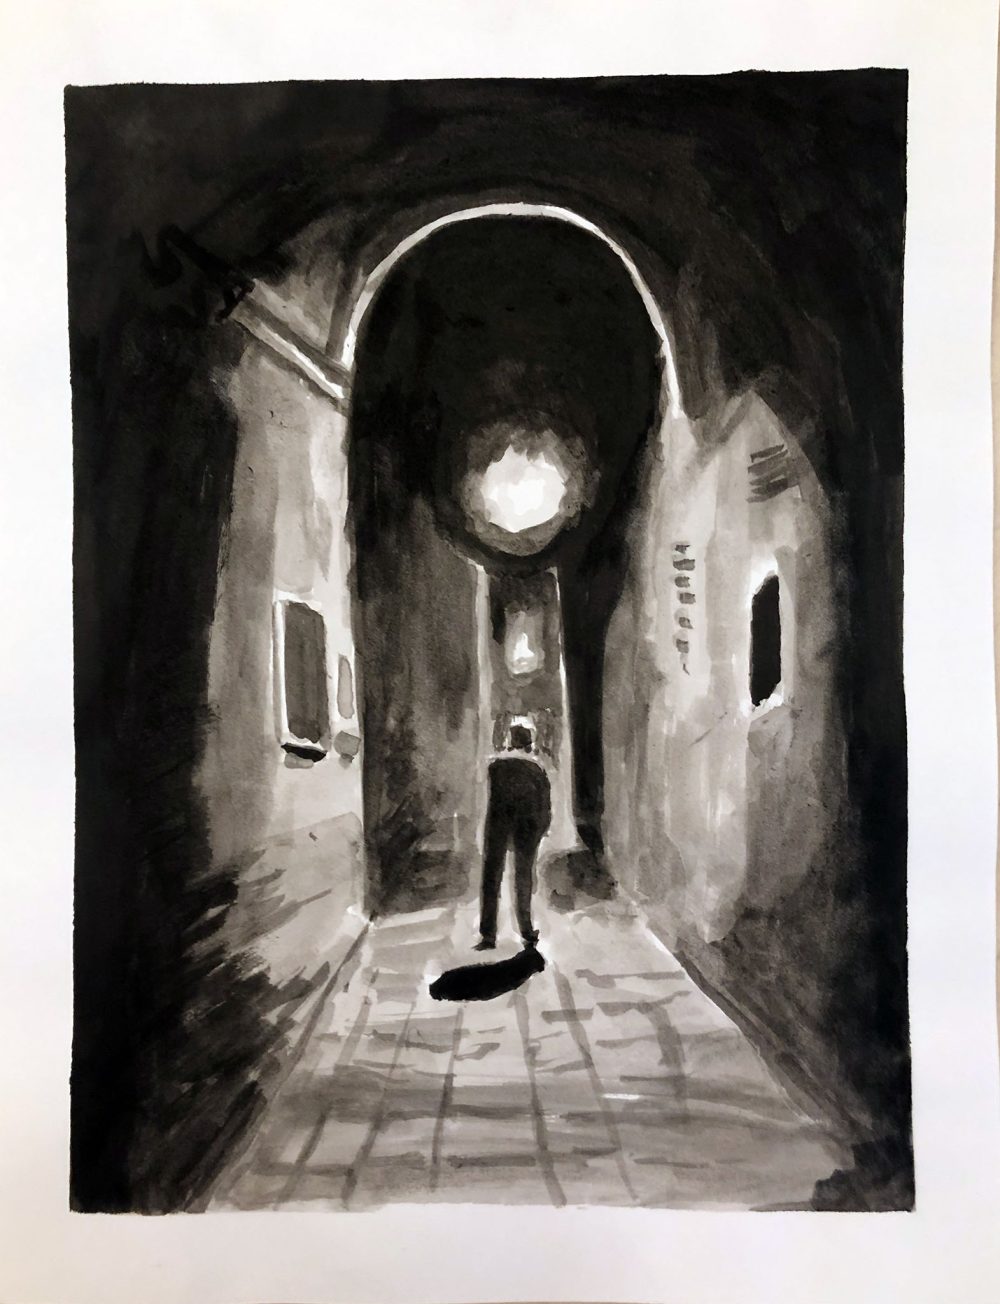 Man walking in light down a dark street.